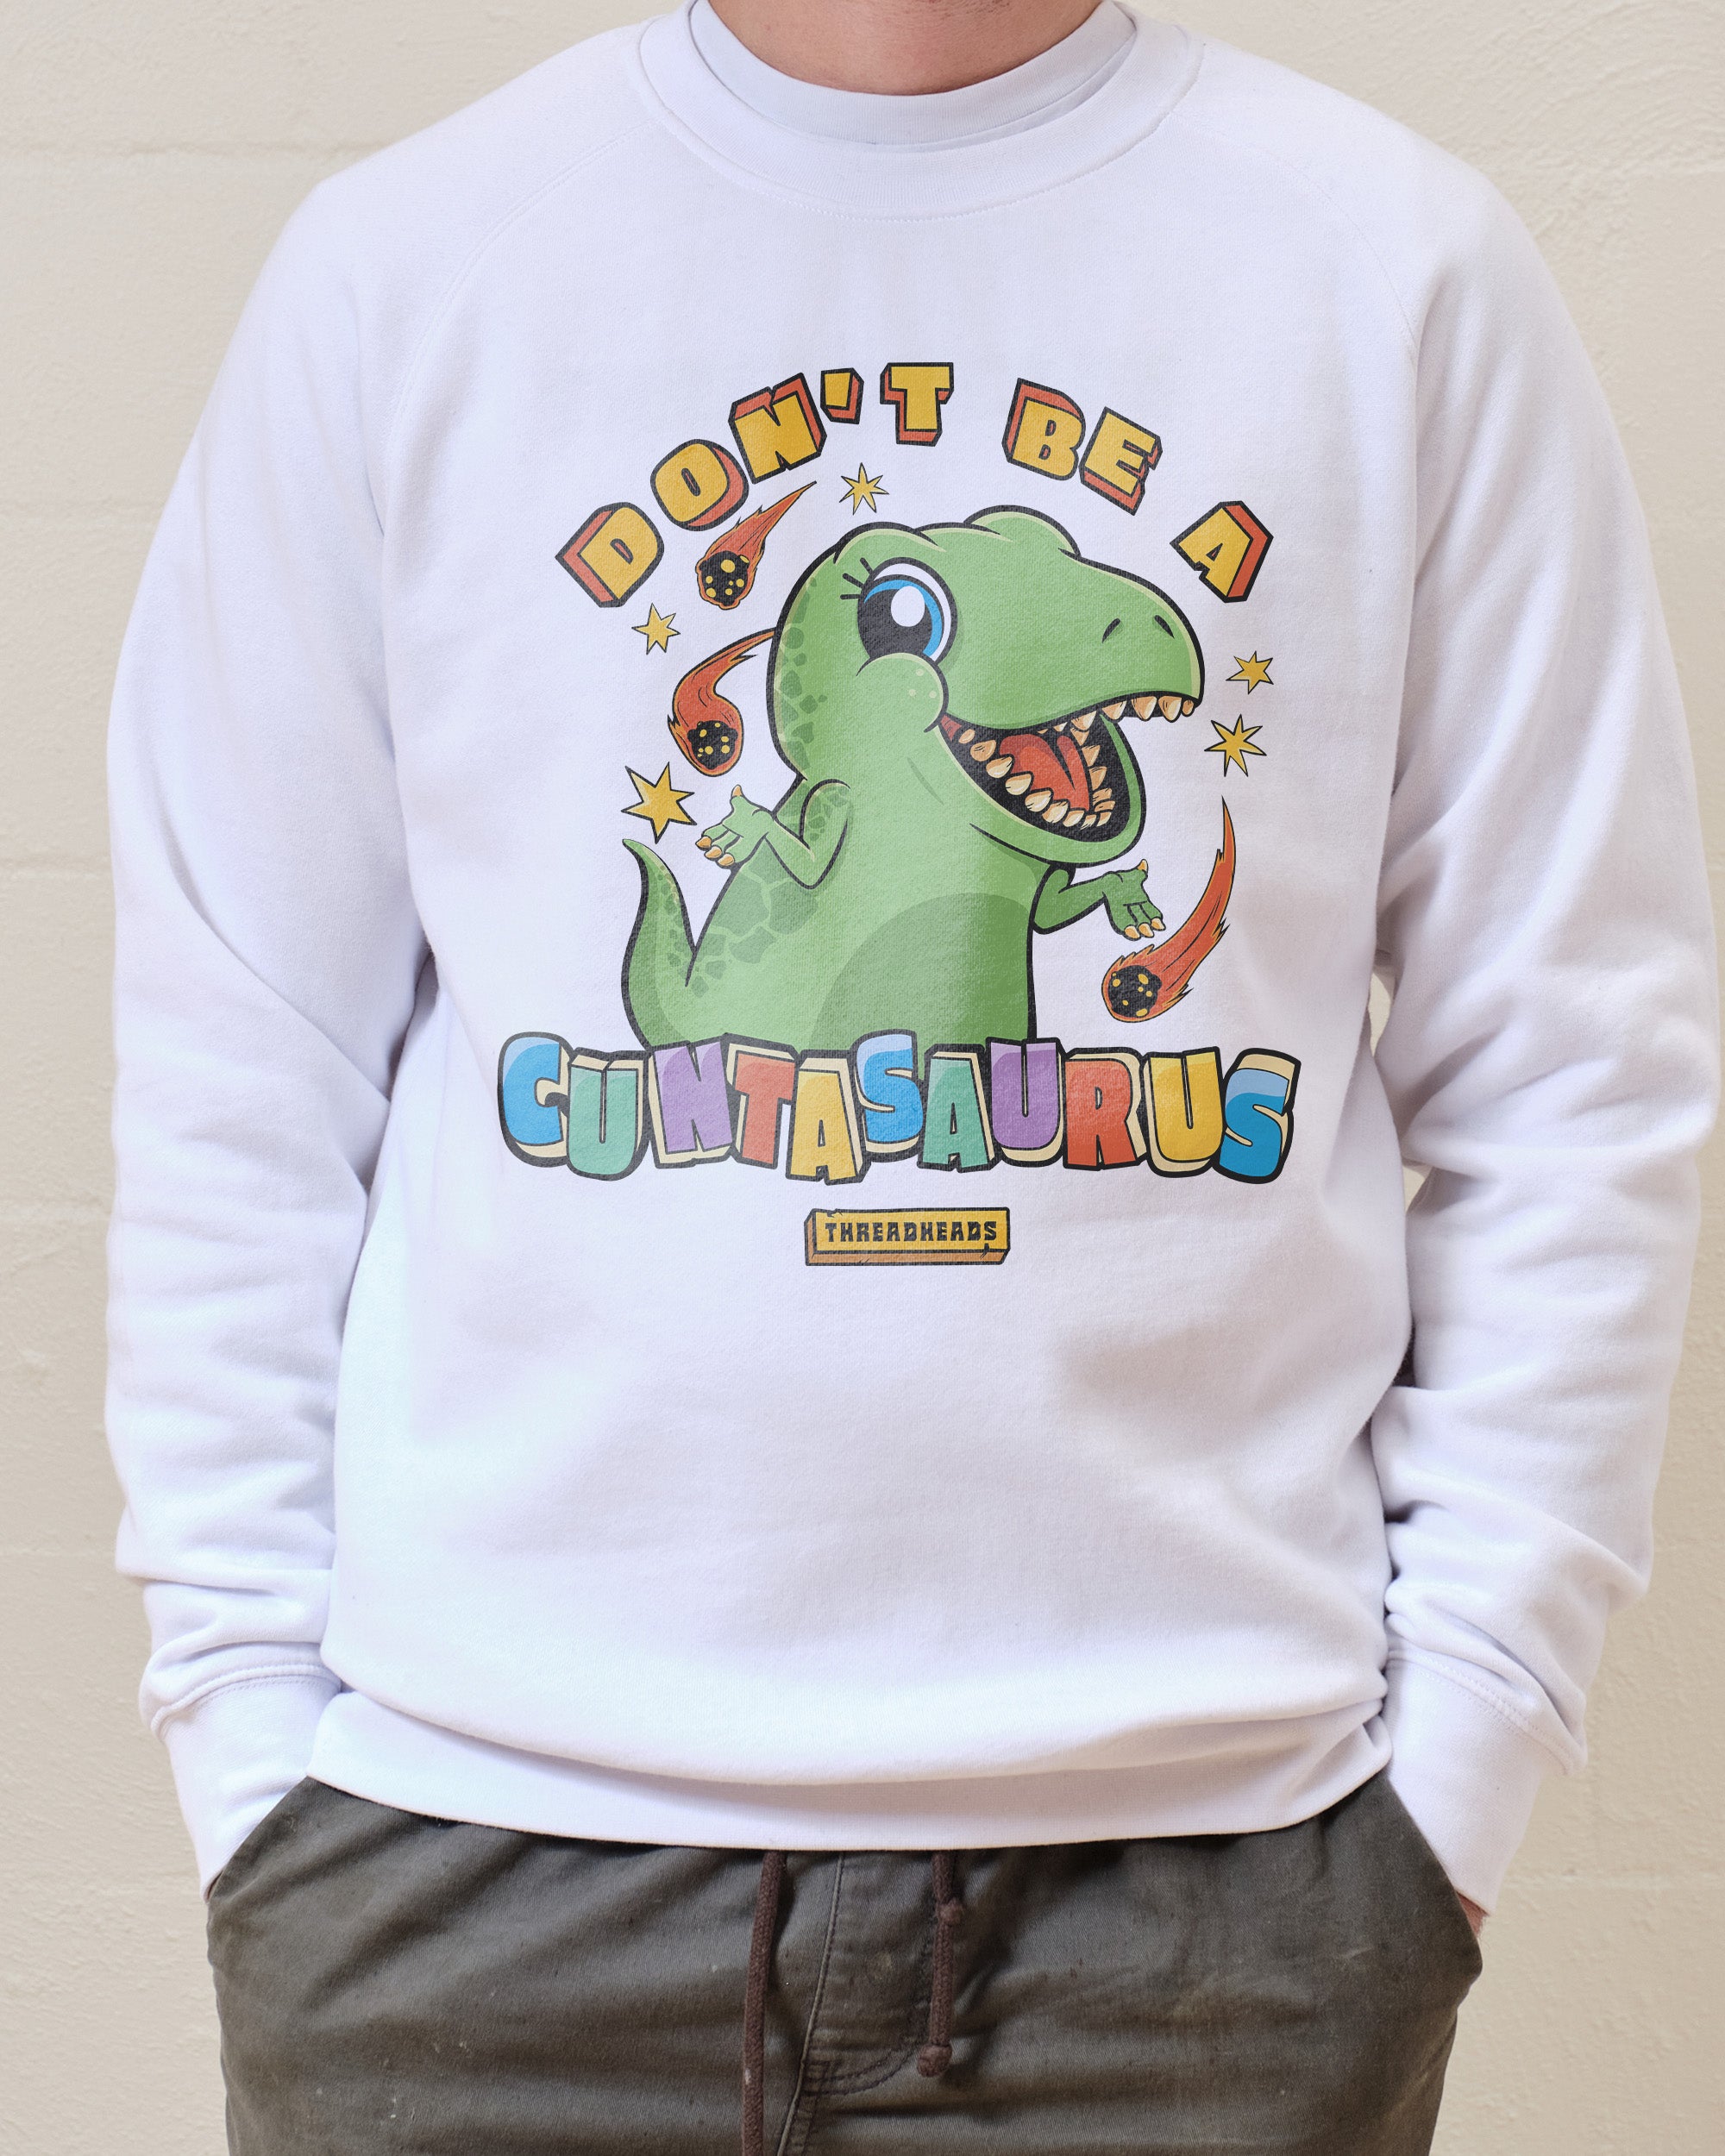 Don't Be a Cuntasaurus Jumper